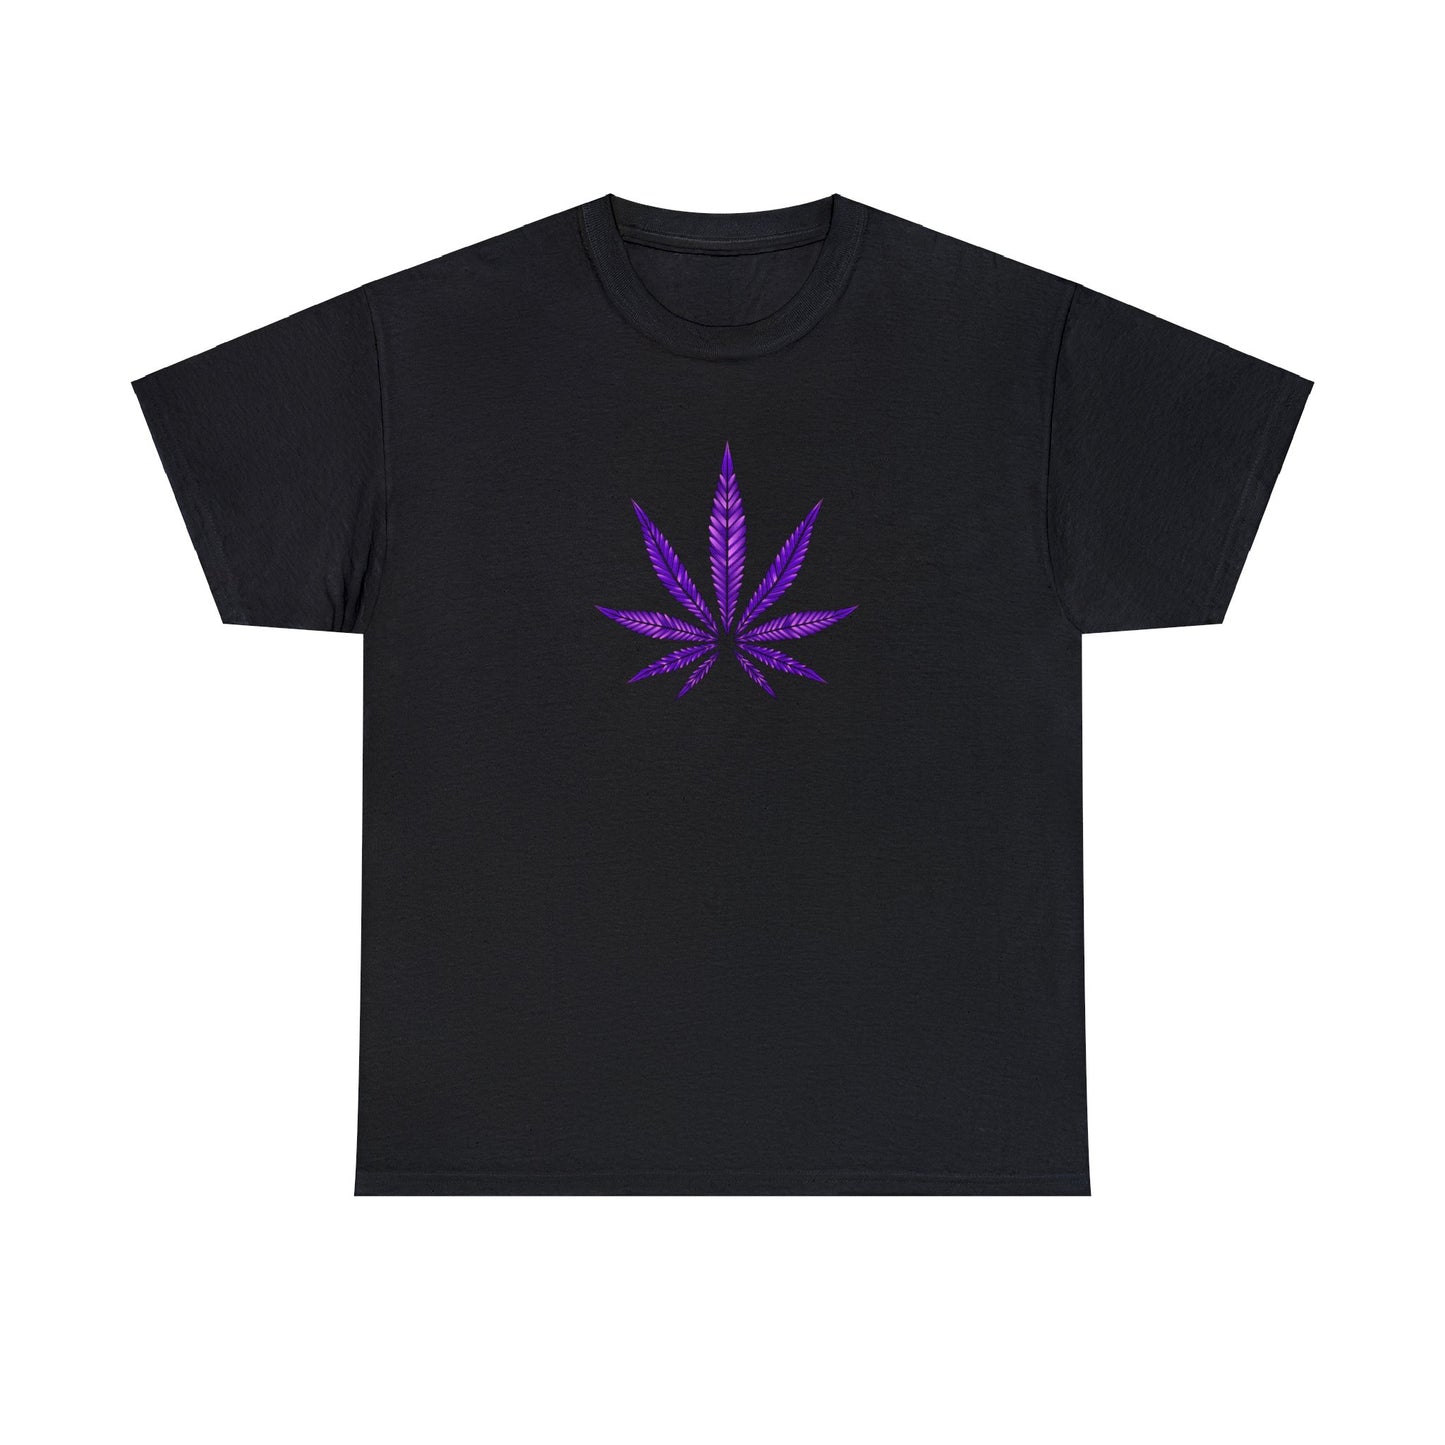 Vibrant-colored Purple Cannabis Leaf Tee, reflecting marijuana culture.